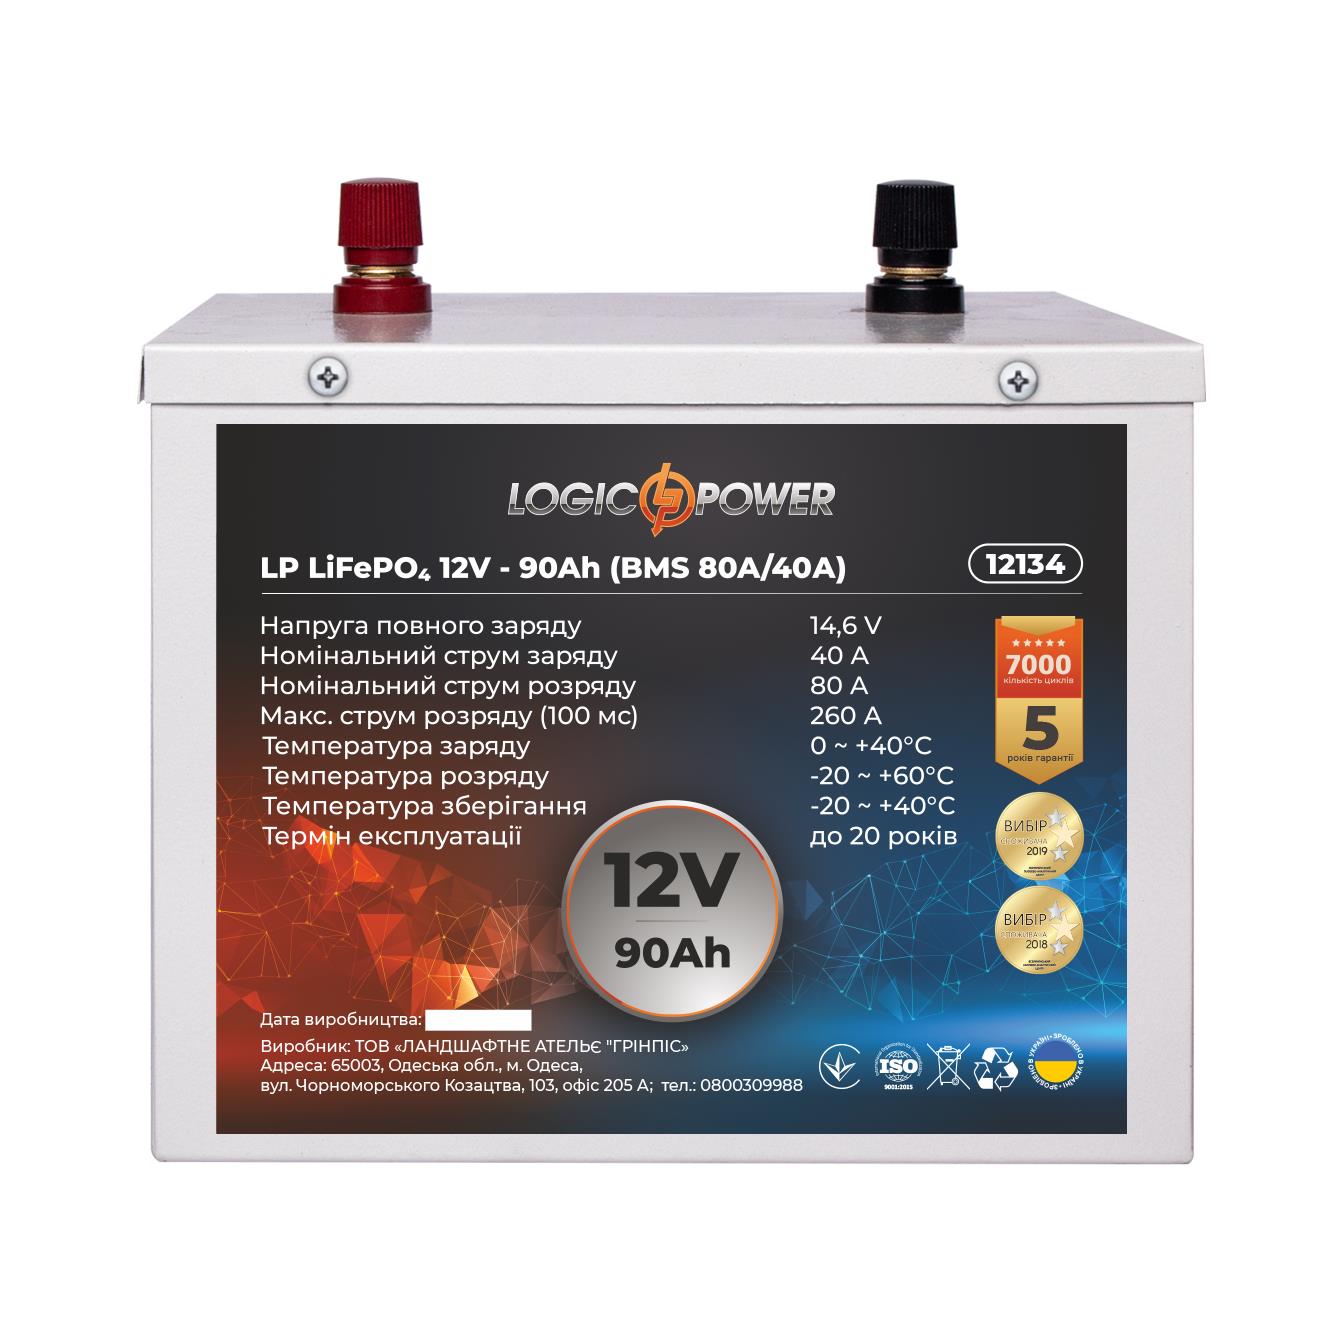 LogicPower LP LiFePO4 12V - 90 Ah (BMS 80A/40A) металл (12134)